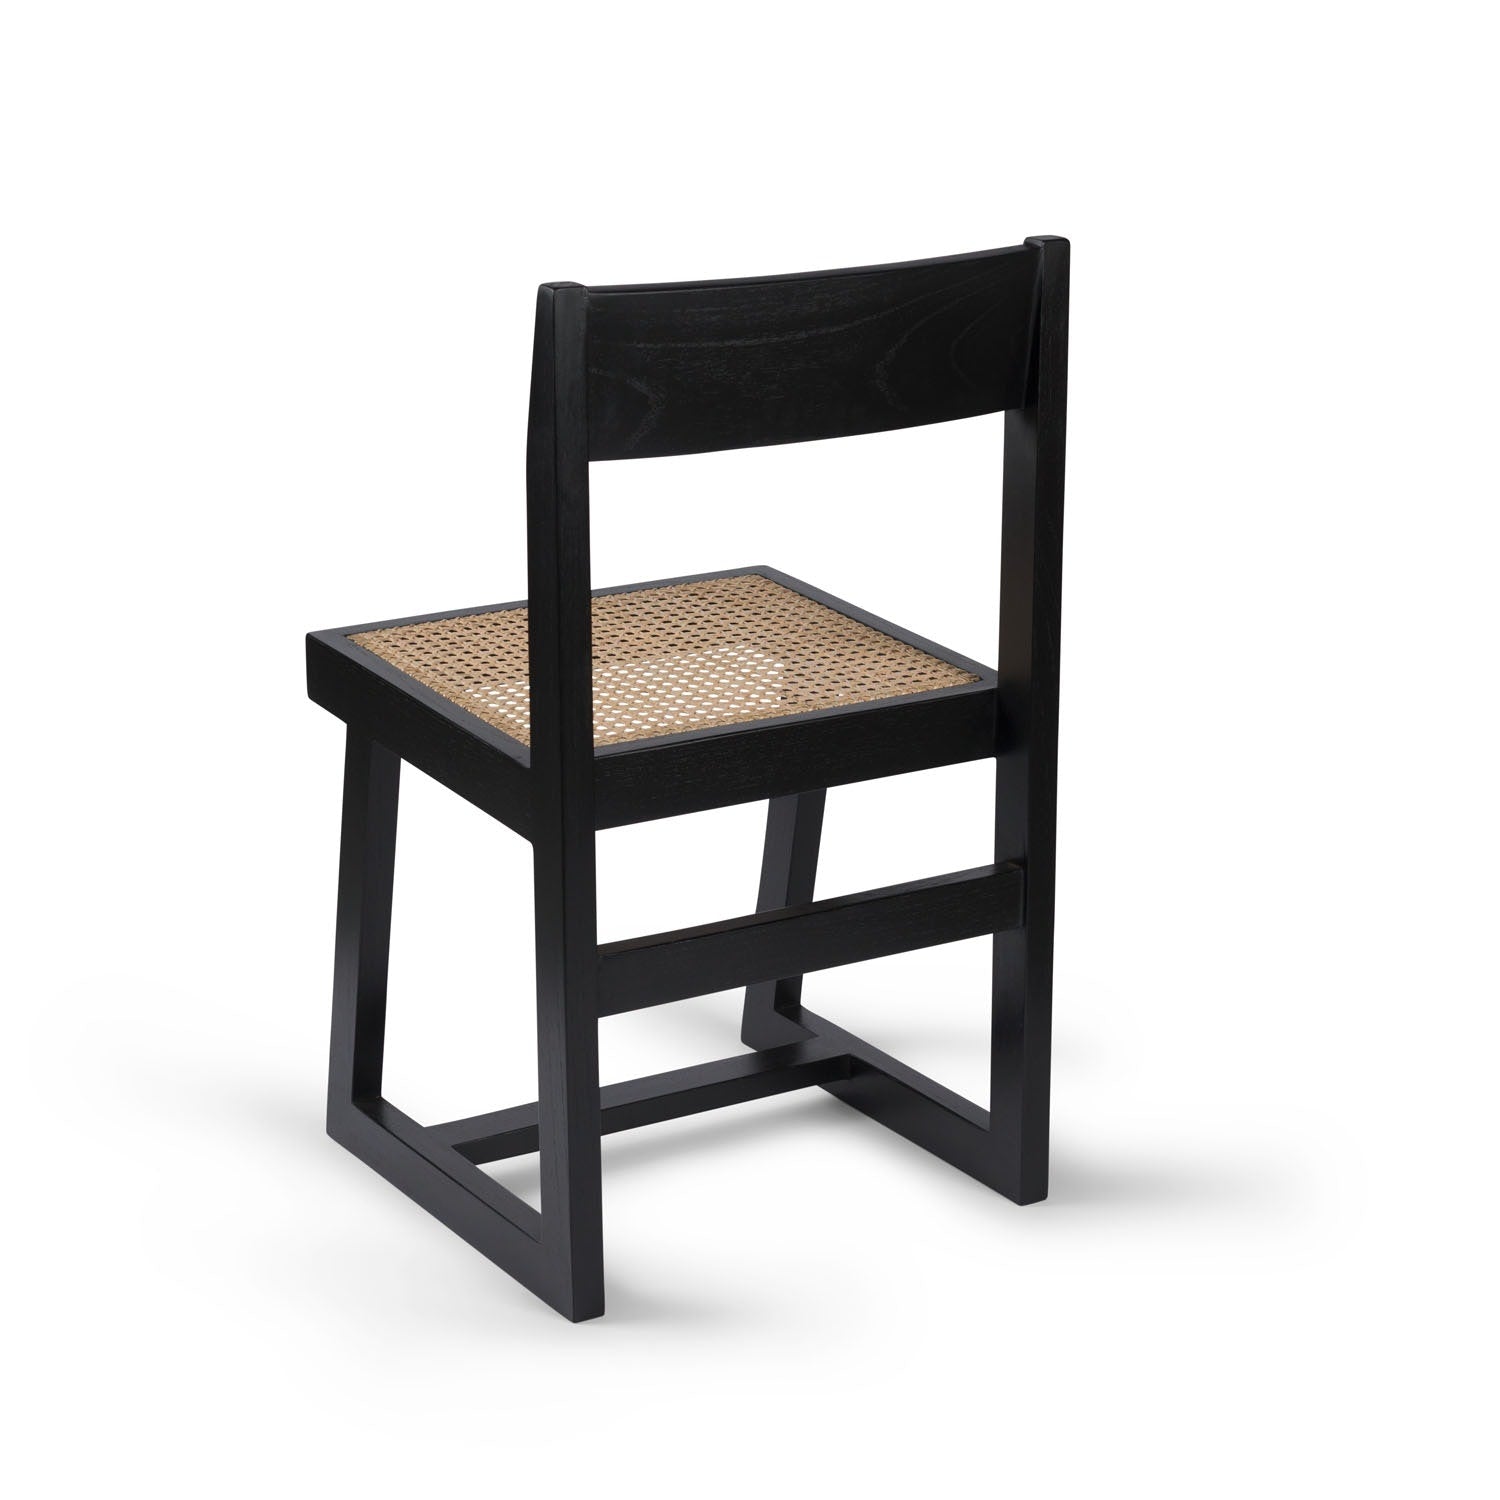 Box Chair - Charcoal Black